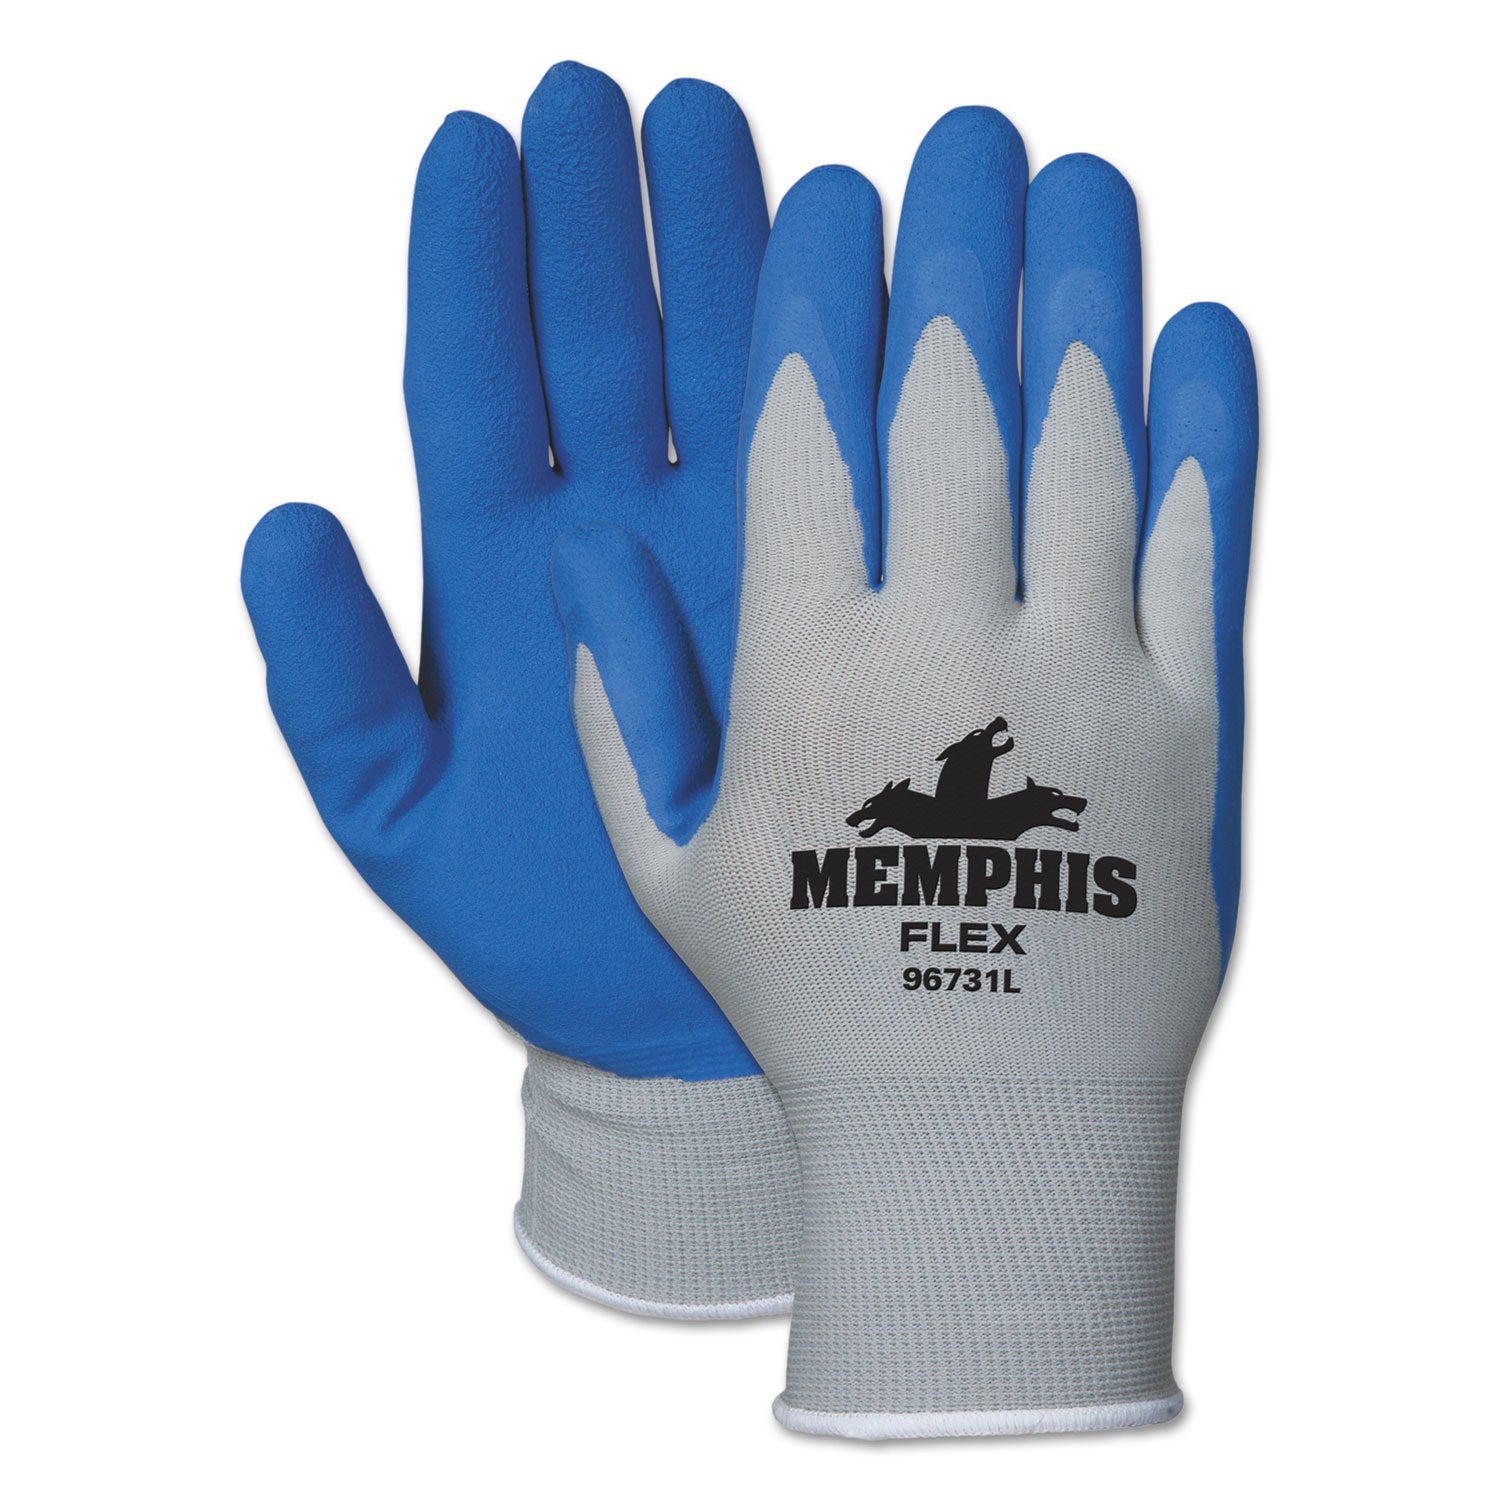 Memphis Flex Seamless Nylon Knit Gloves, Small, Blue/Gray, Pair - 